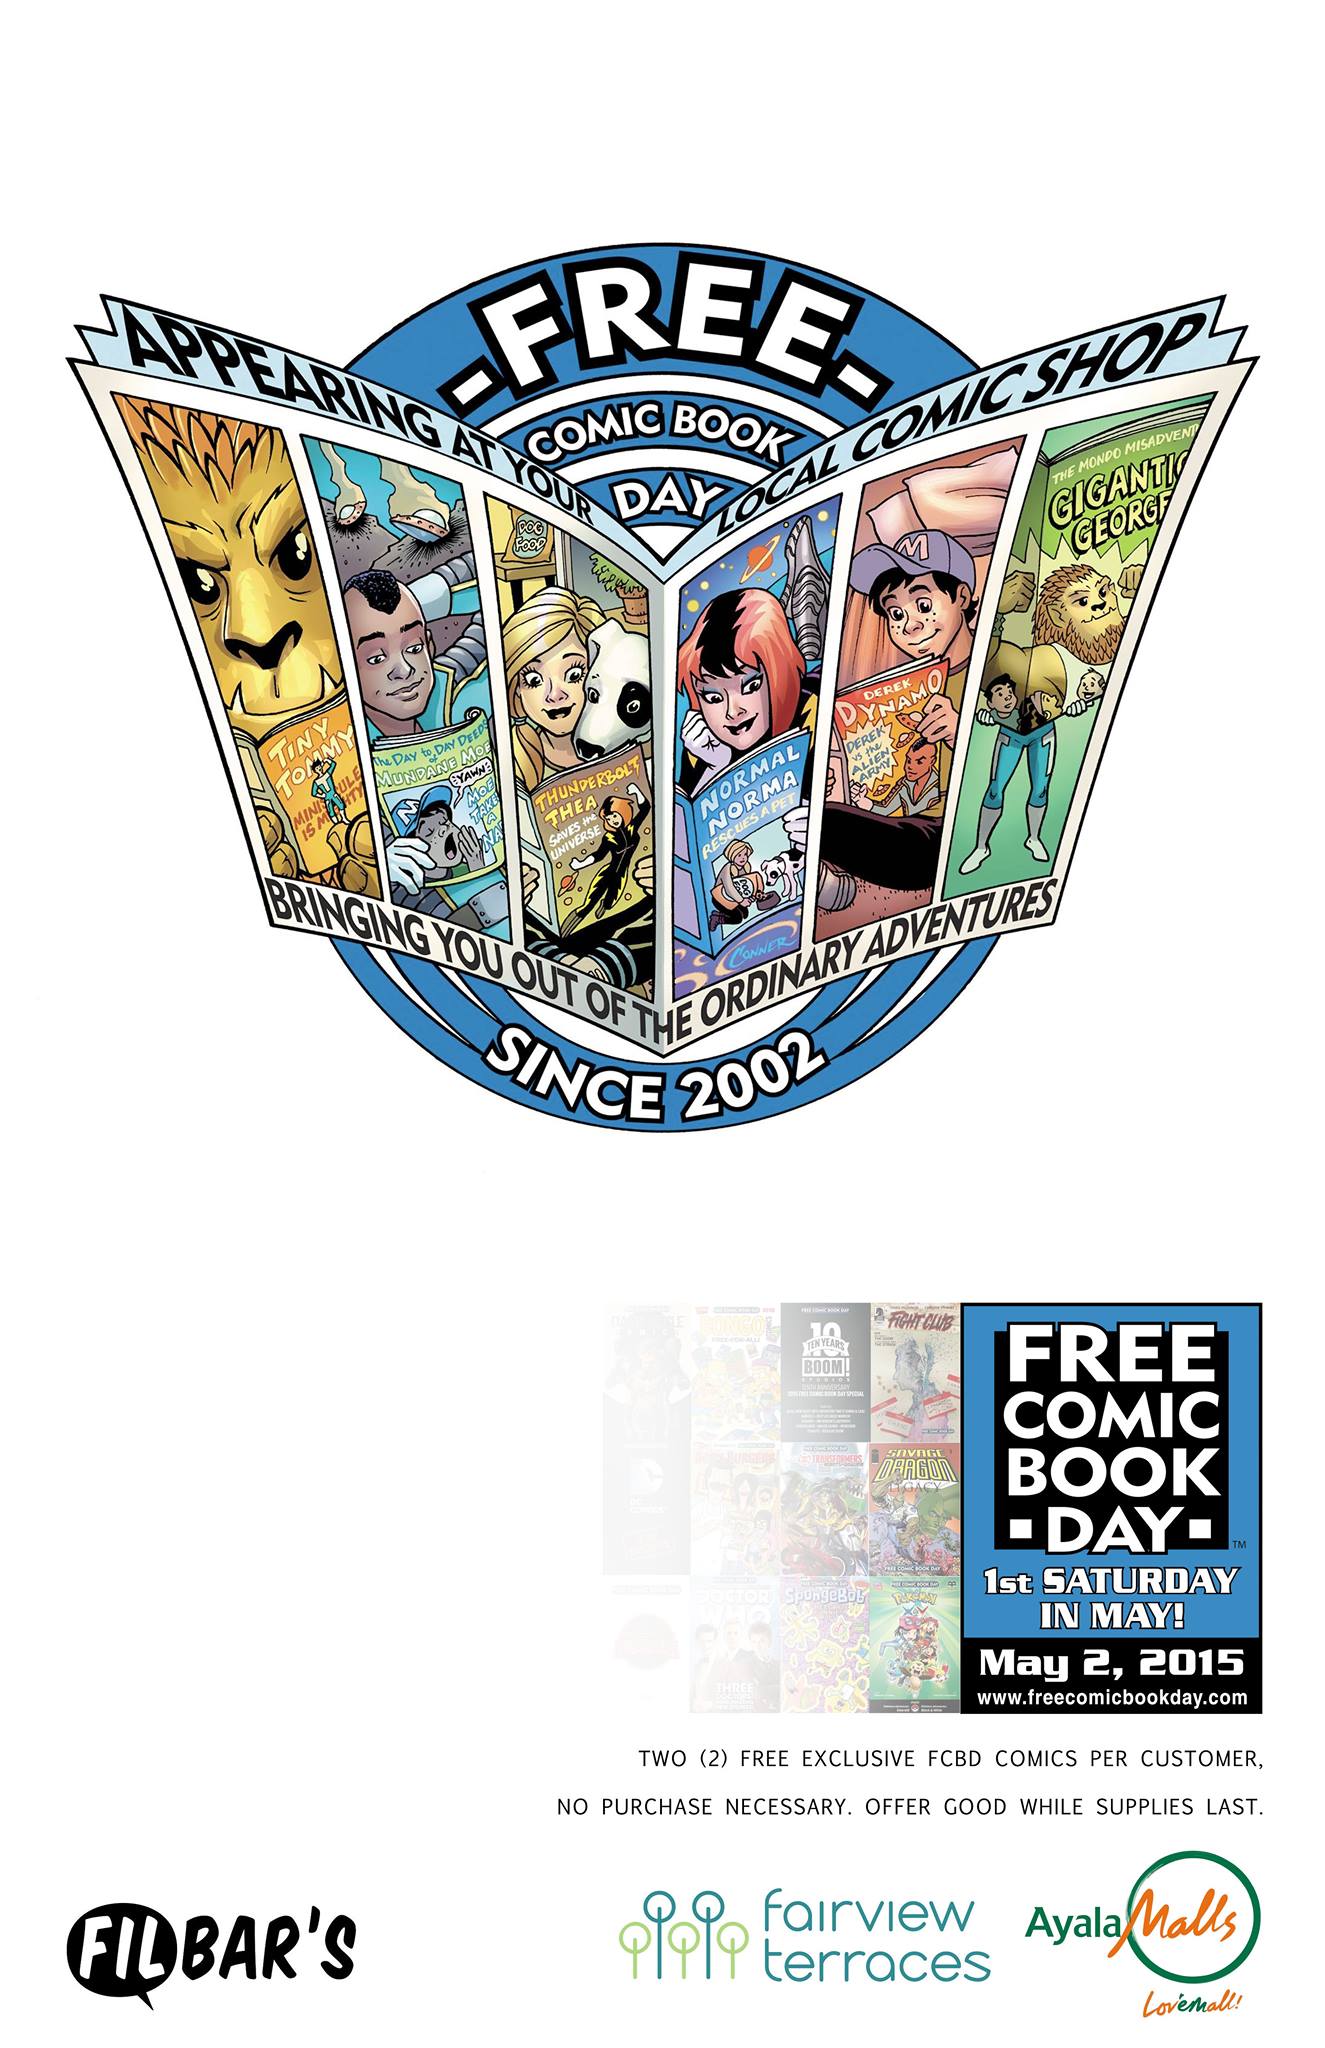 Filbar's Fairview Terraces Free Comic Book Day